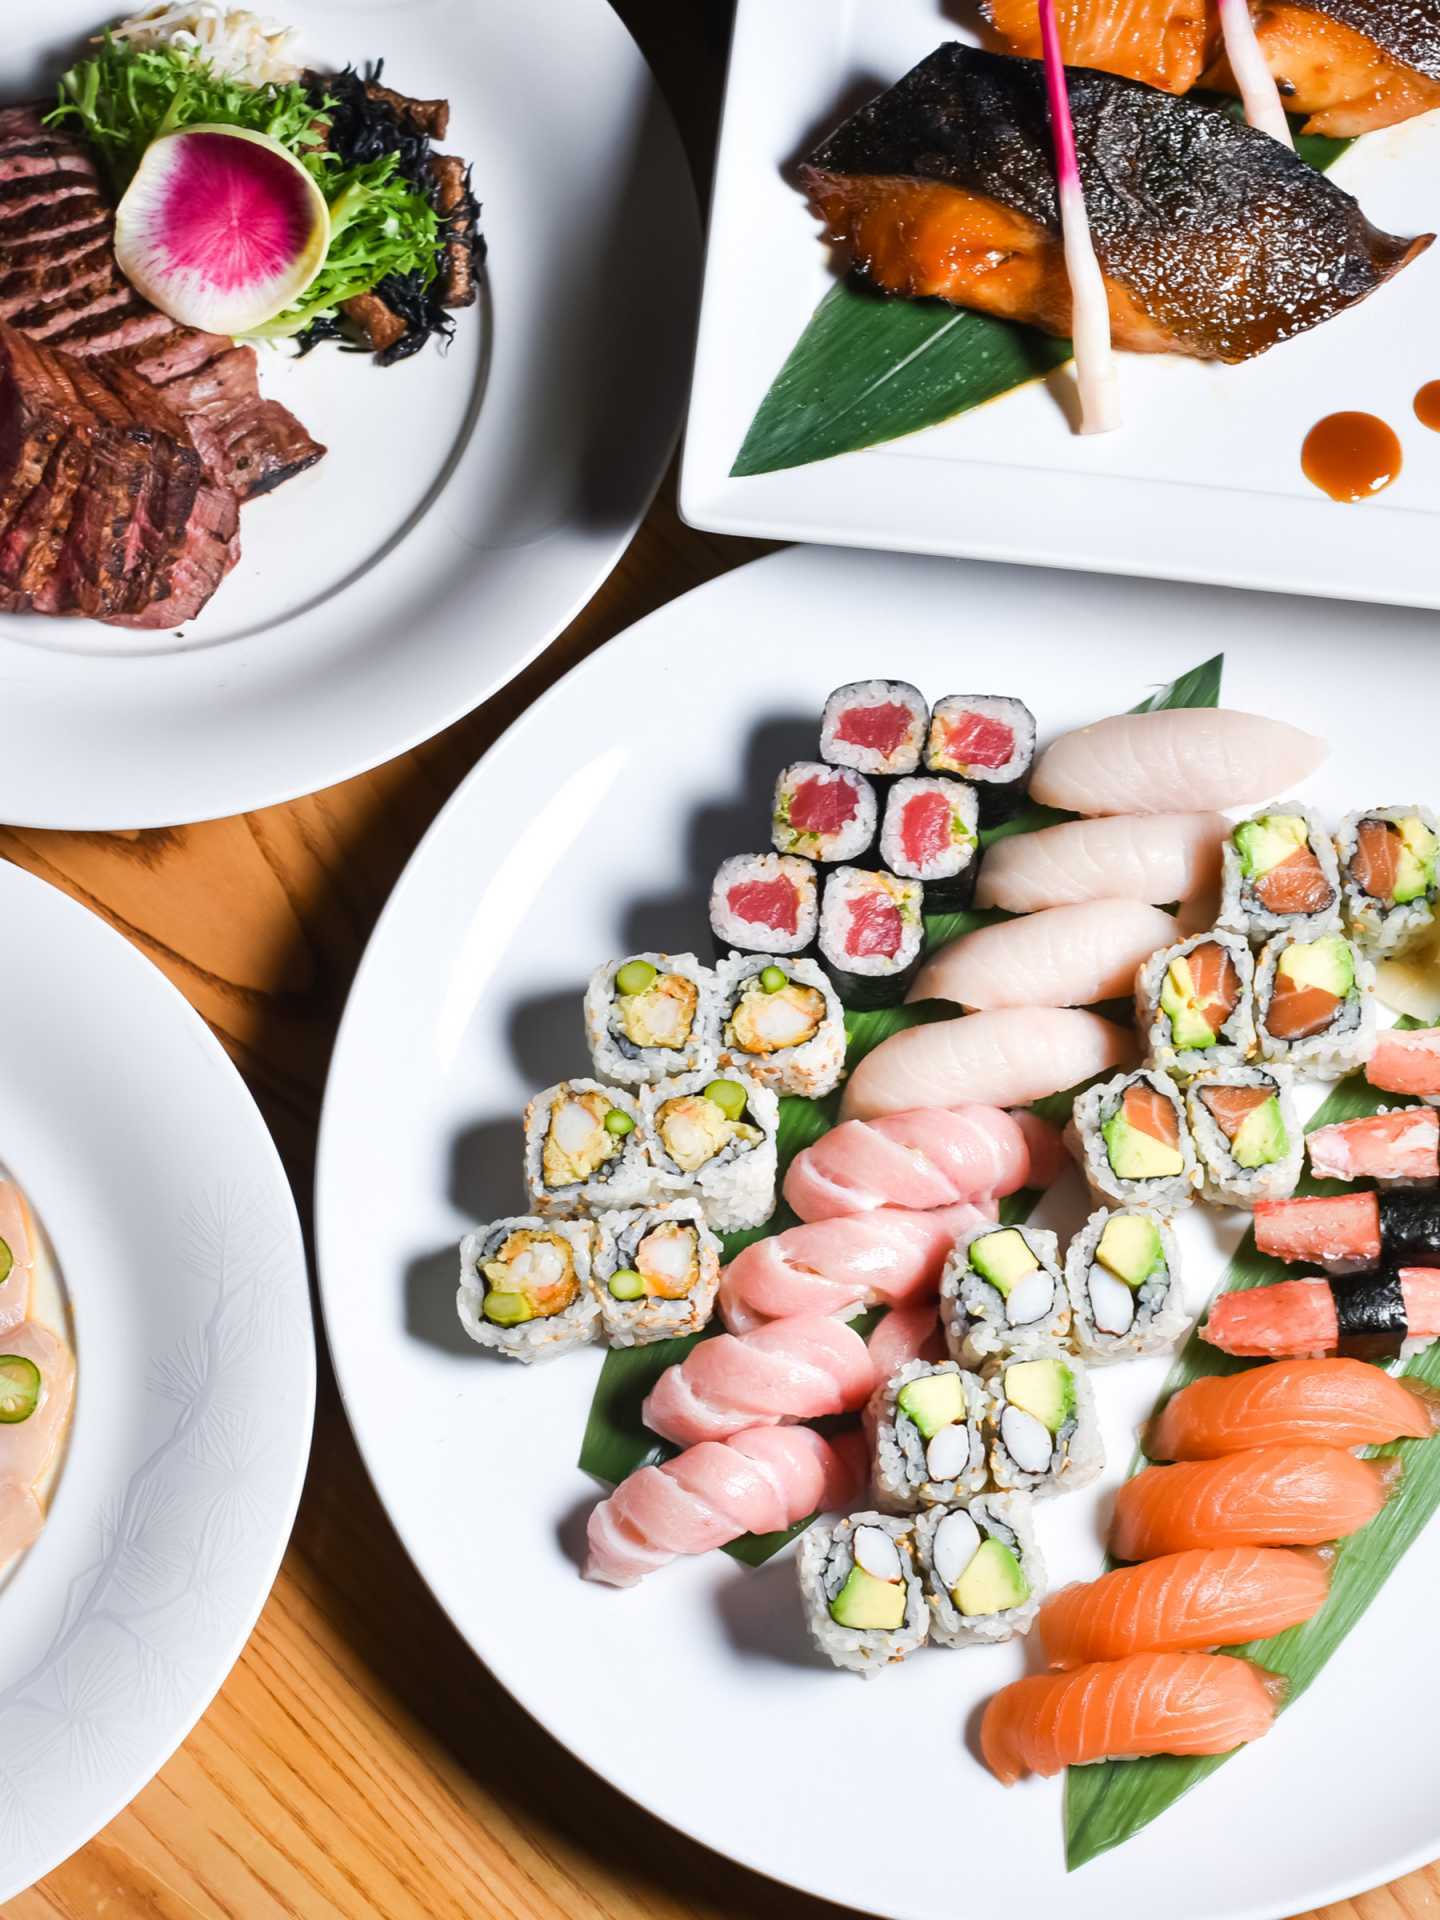 Best new Toronto restaurants | Assorted sushi and rolls at Nobu